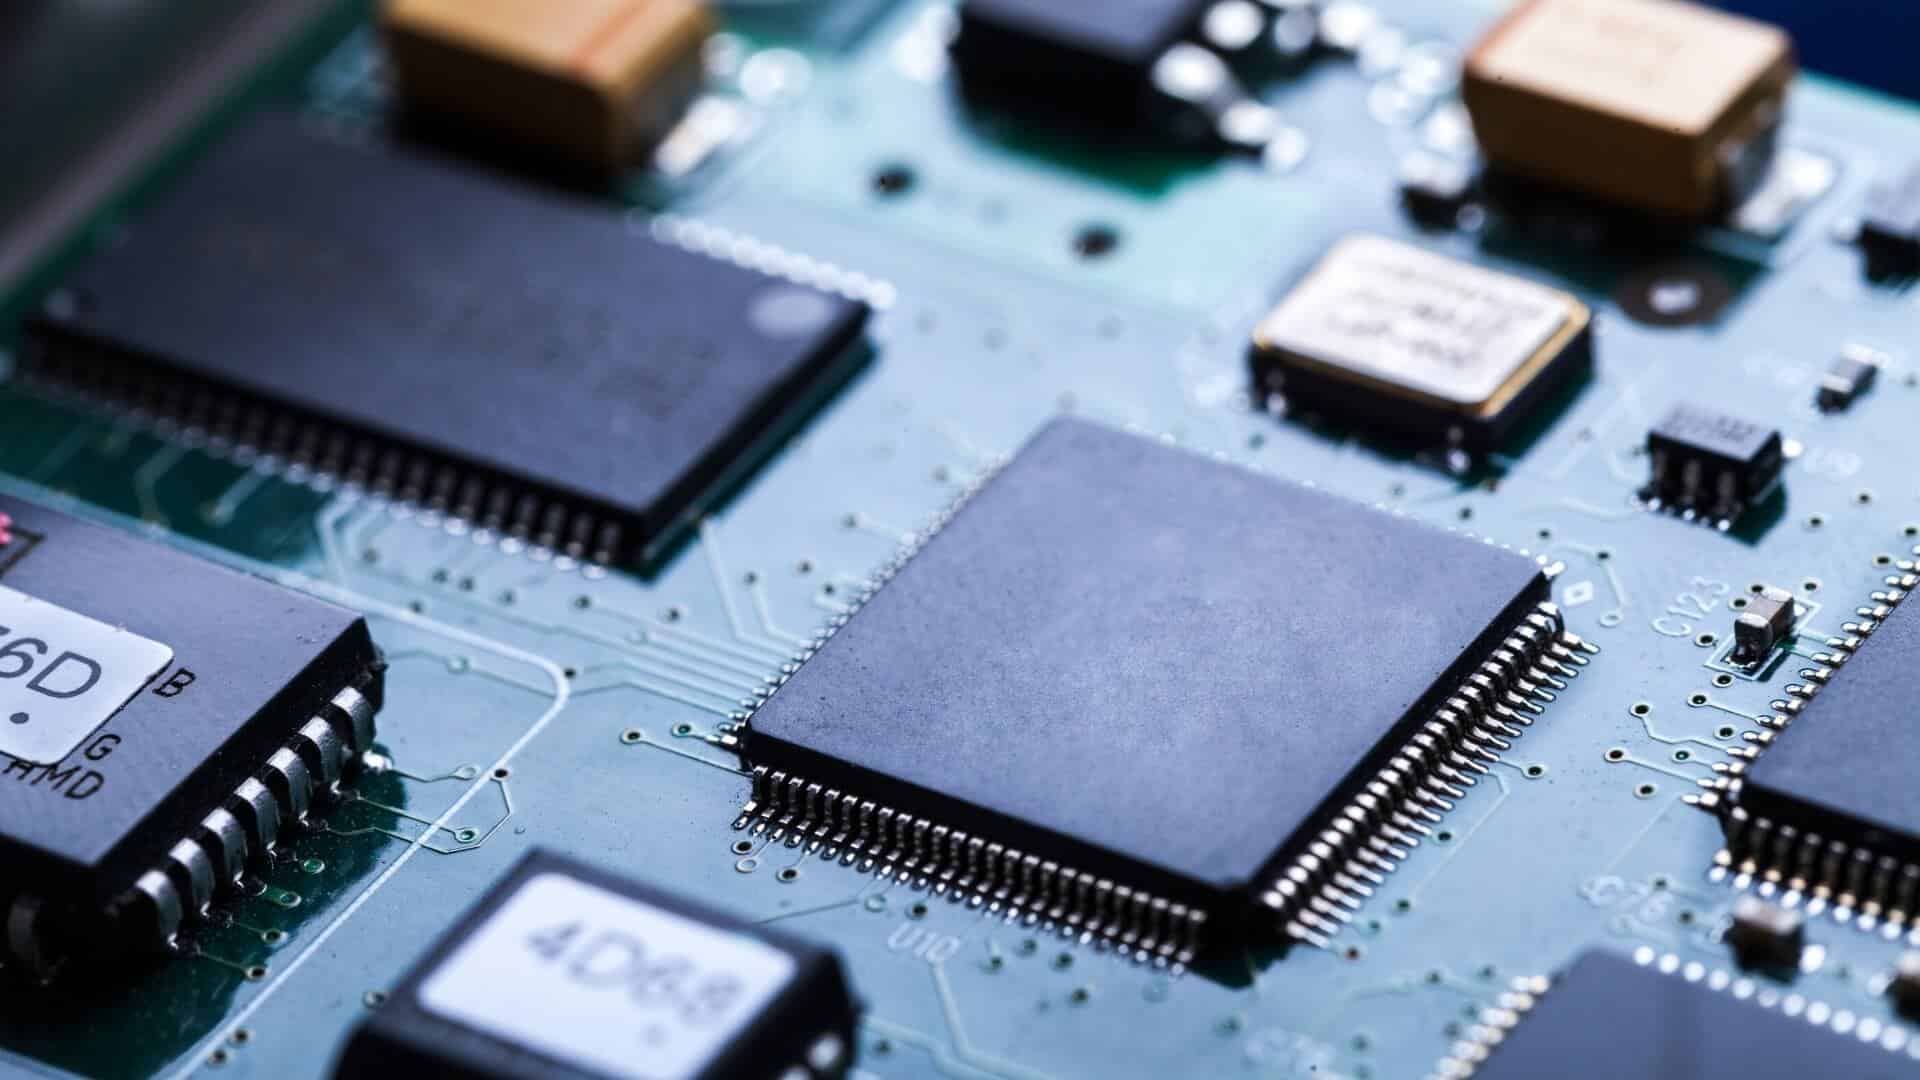 Intel blames Qualcomm for failed modern chip business